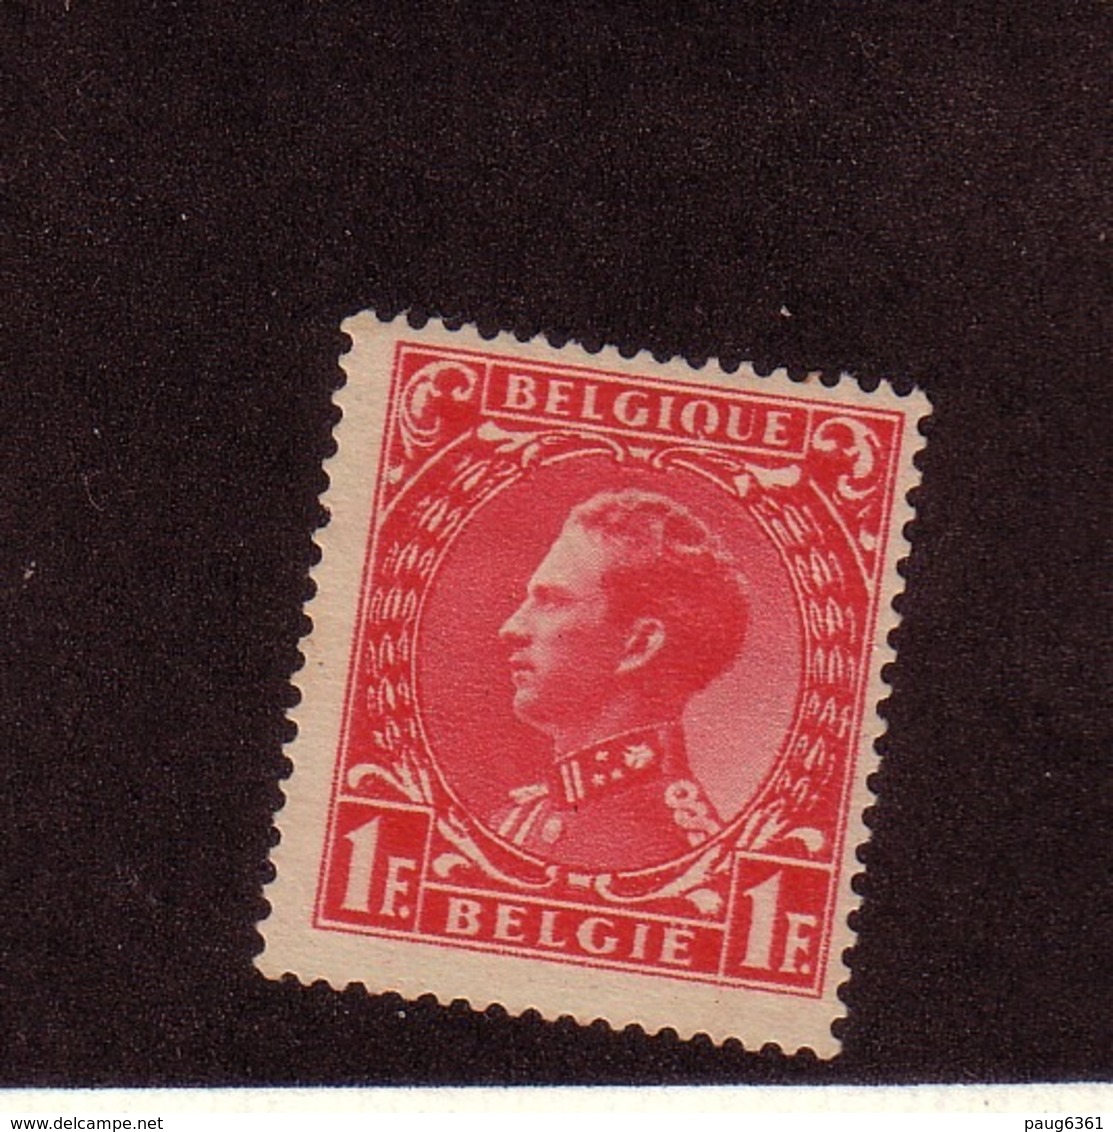 BELGIQUE 1934/35 LEOPOLD III   YVERT N°403  NEUF MH* - 1934-1935 Leopoldo III